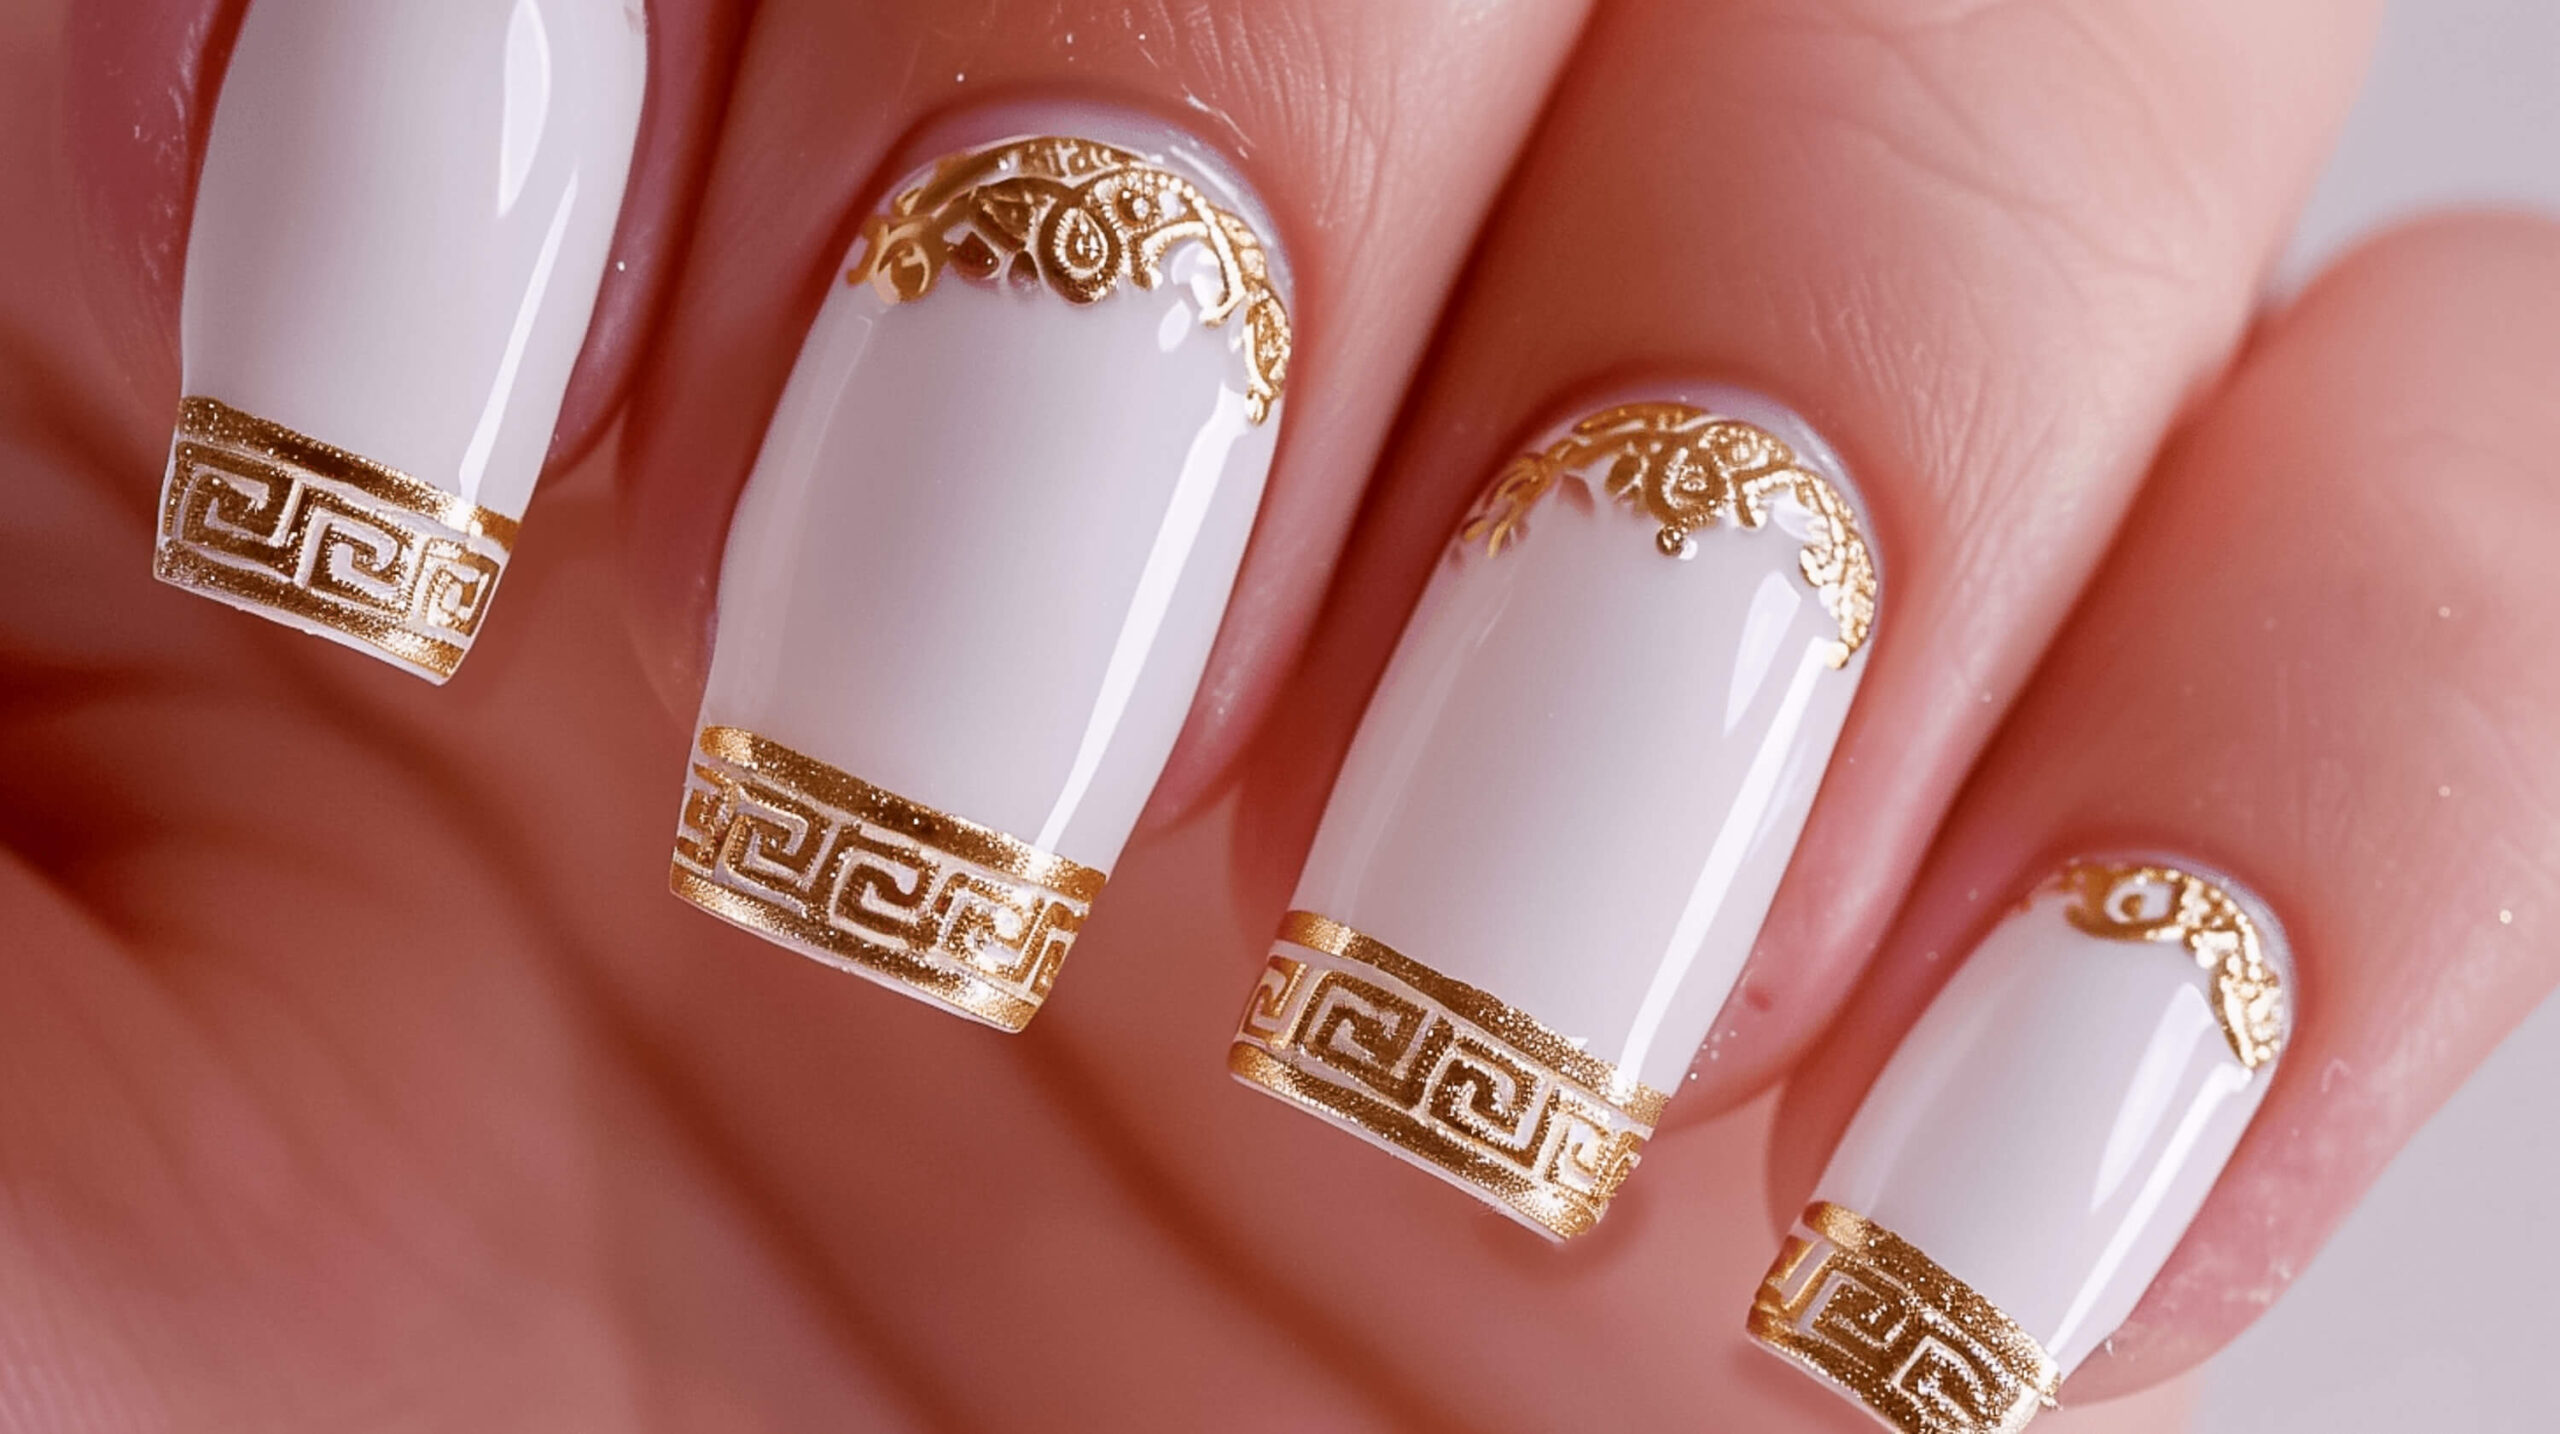 Greek goddess nails